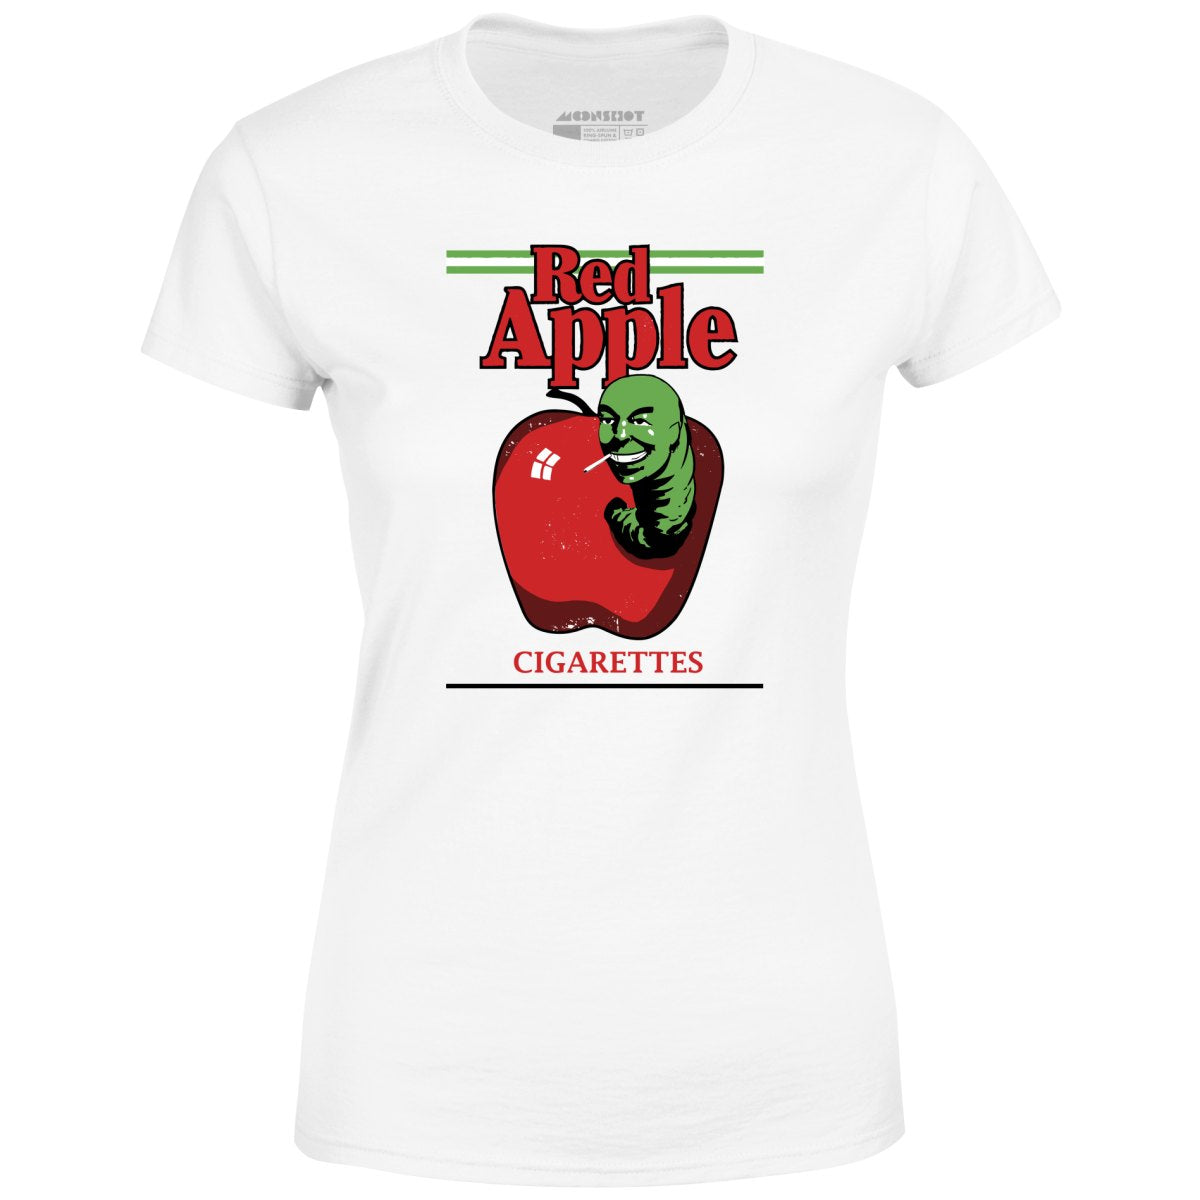 Red Apple Cigarettes - Women's T-Shirt